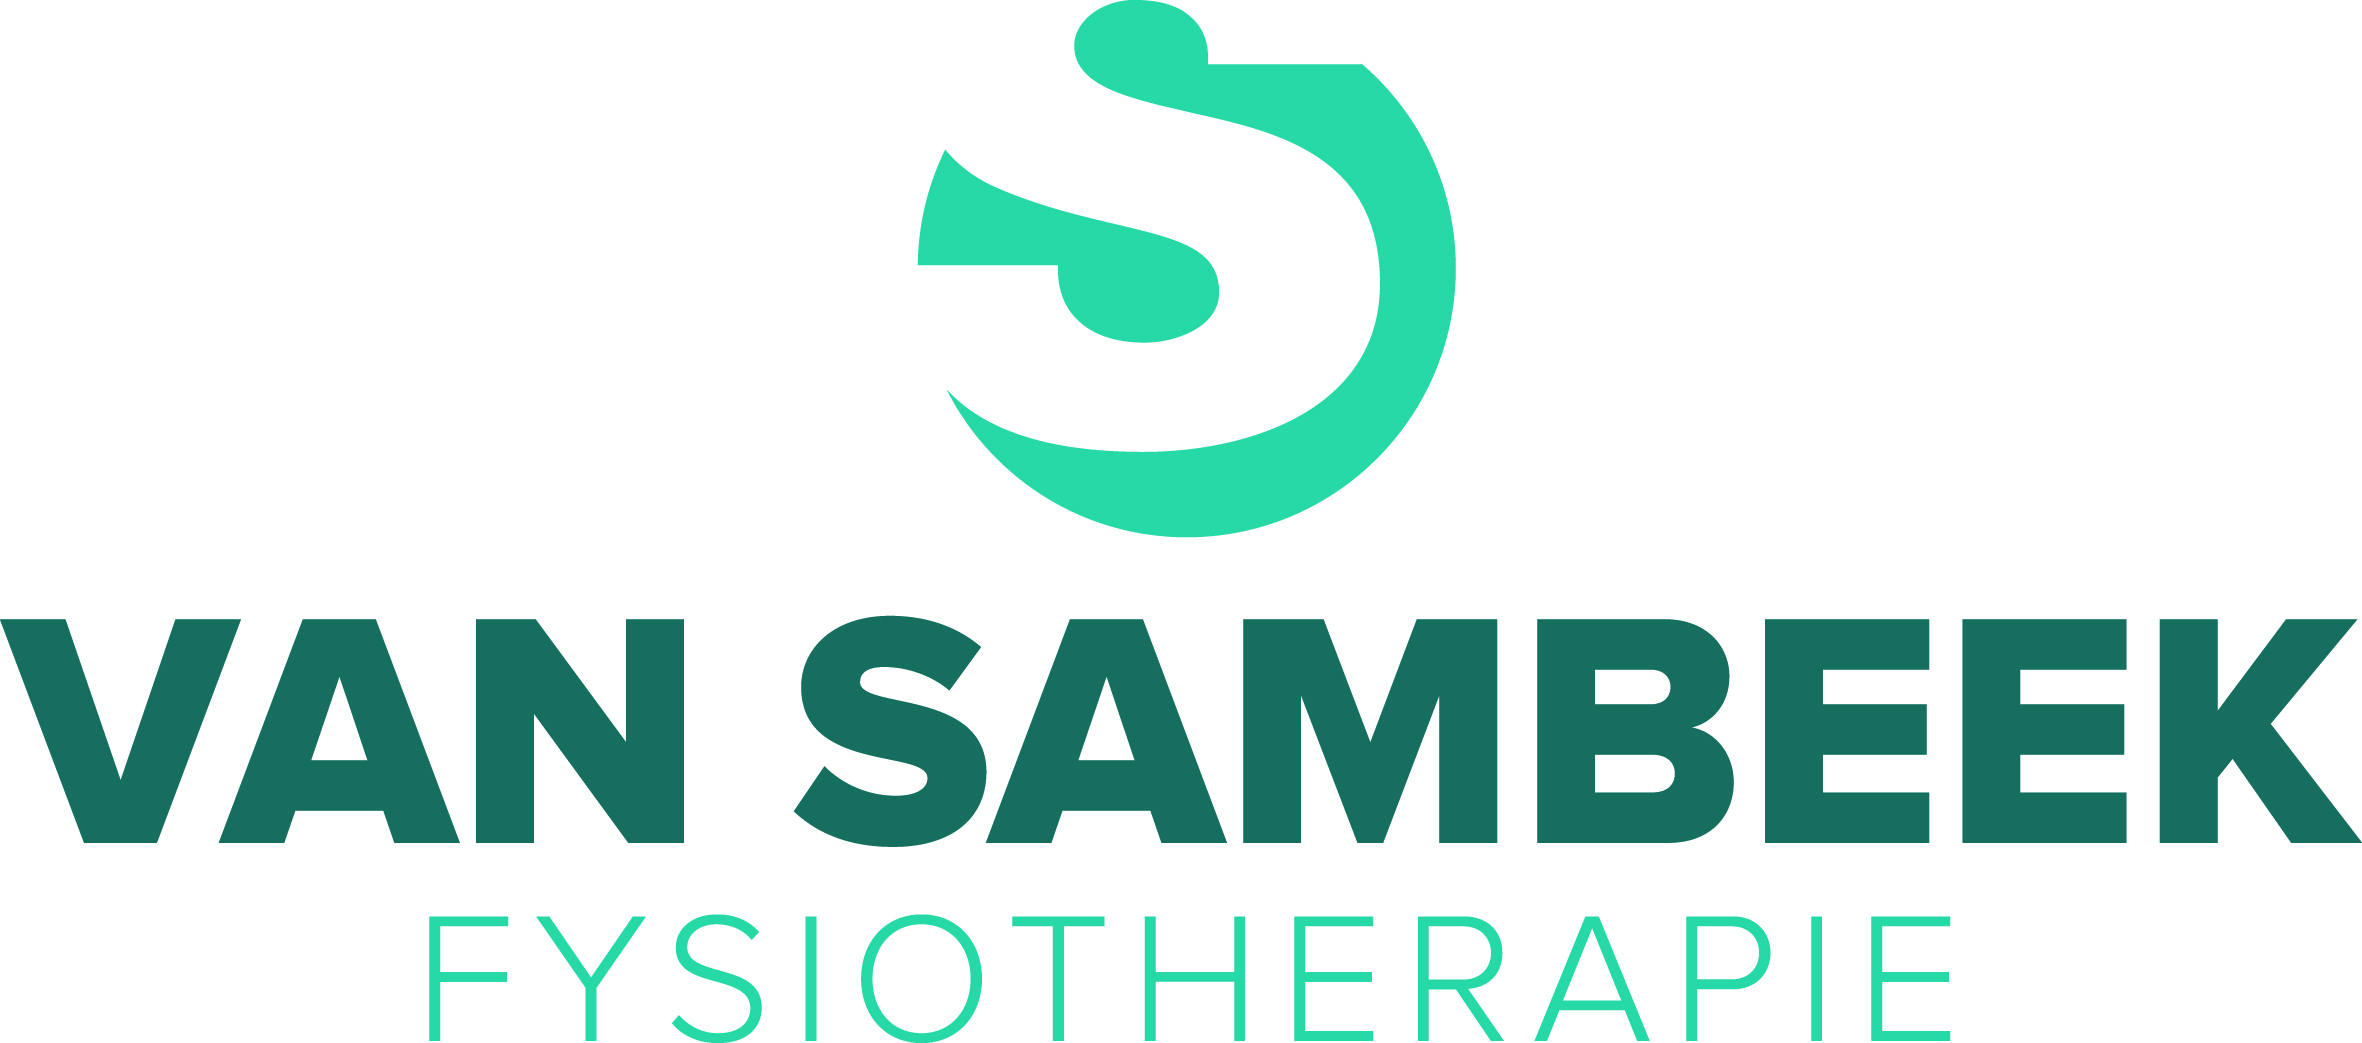 Van Sambeek Fysiotherapie